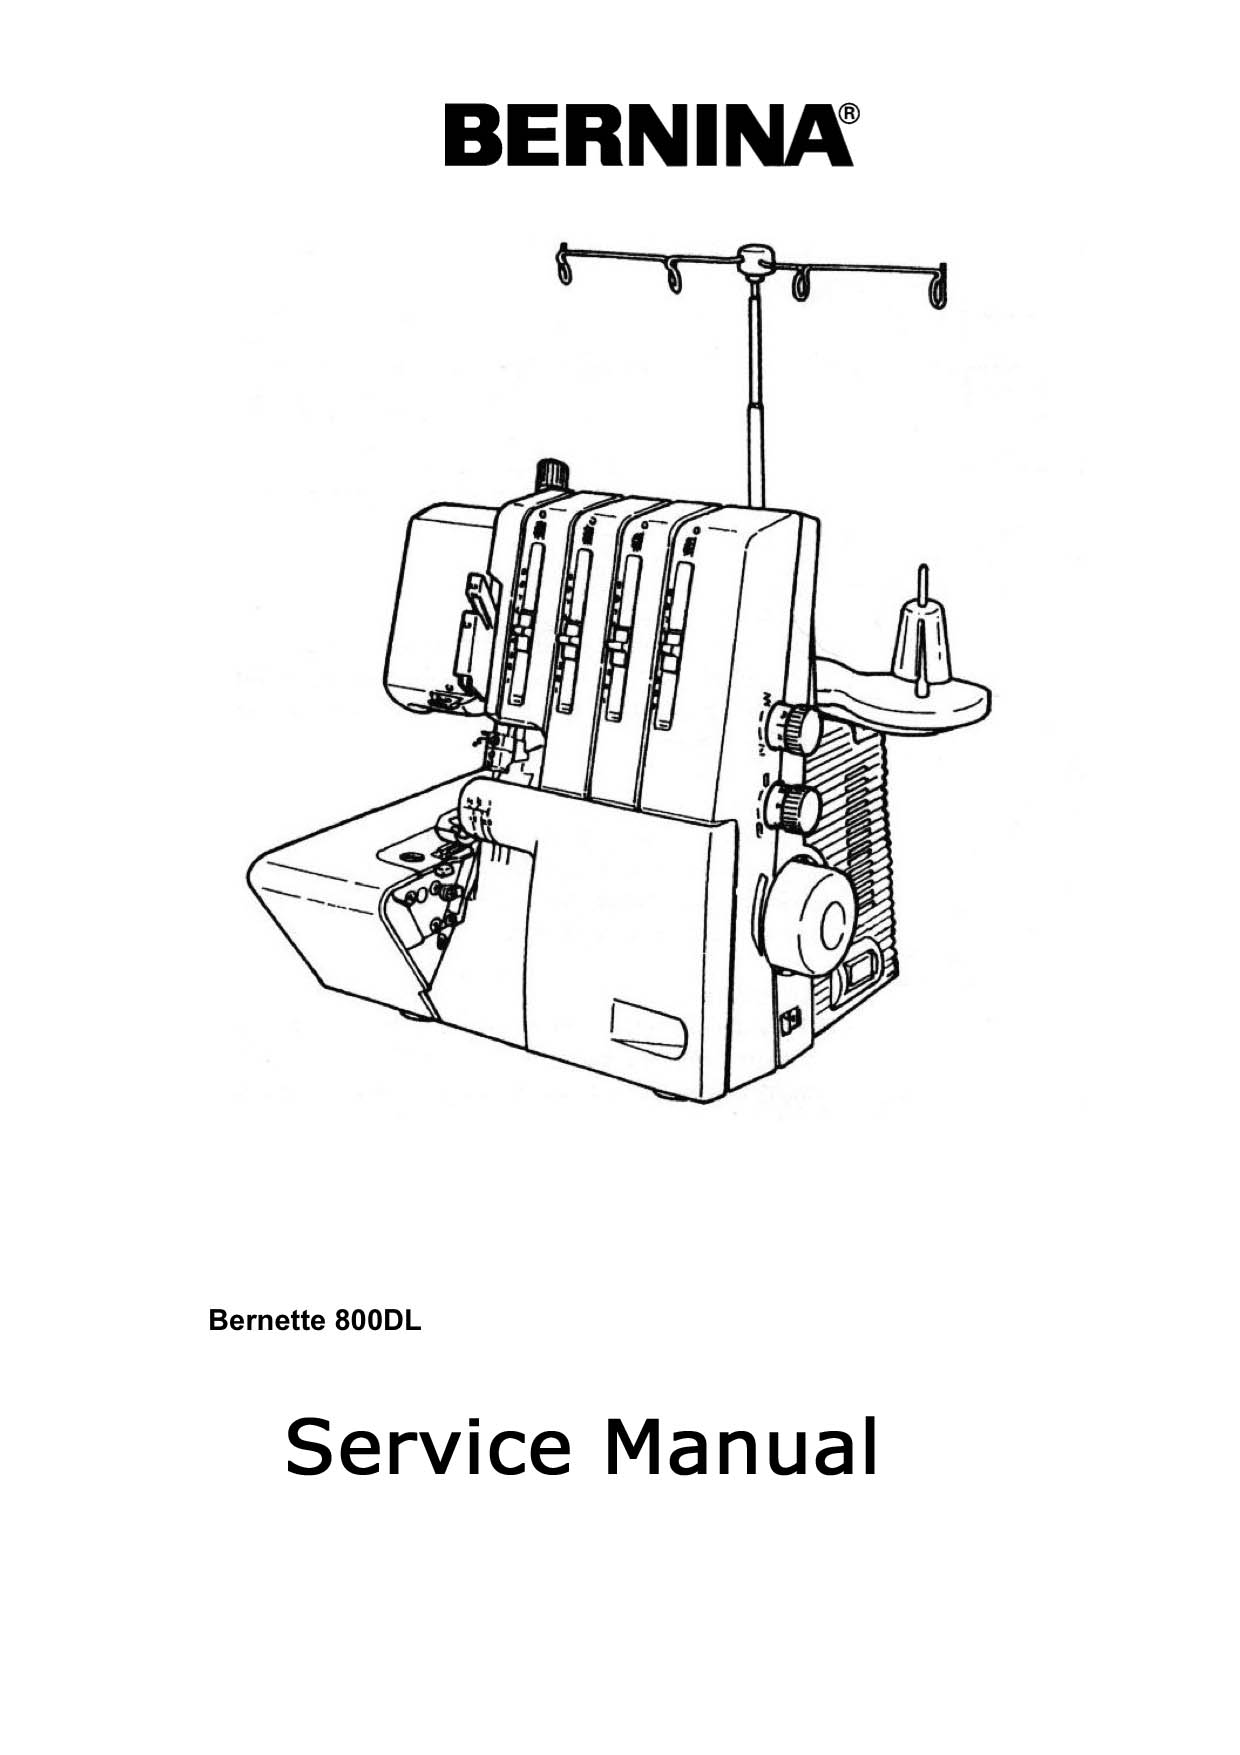 Merrylock serger repair manual instructions